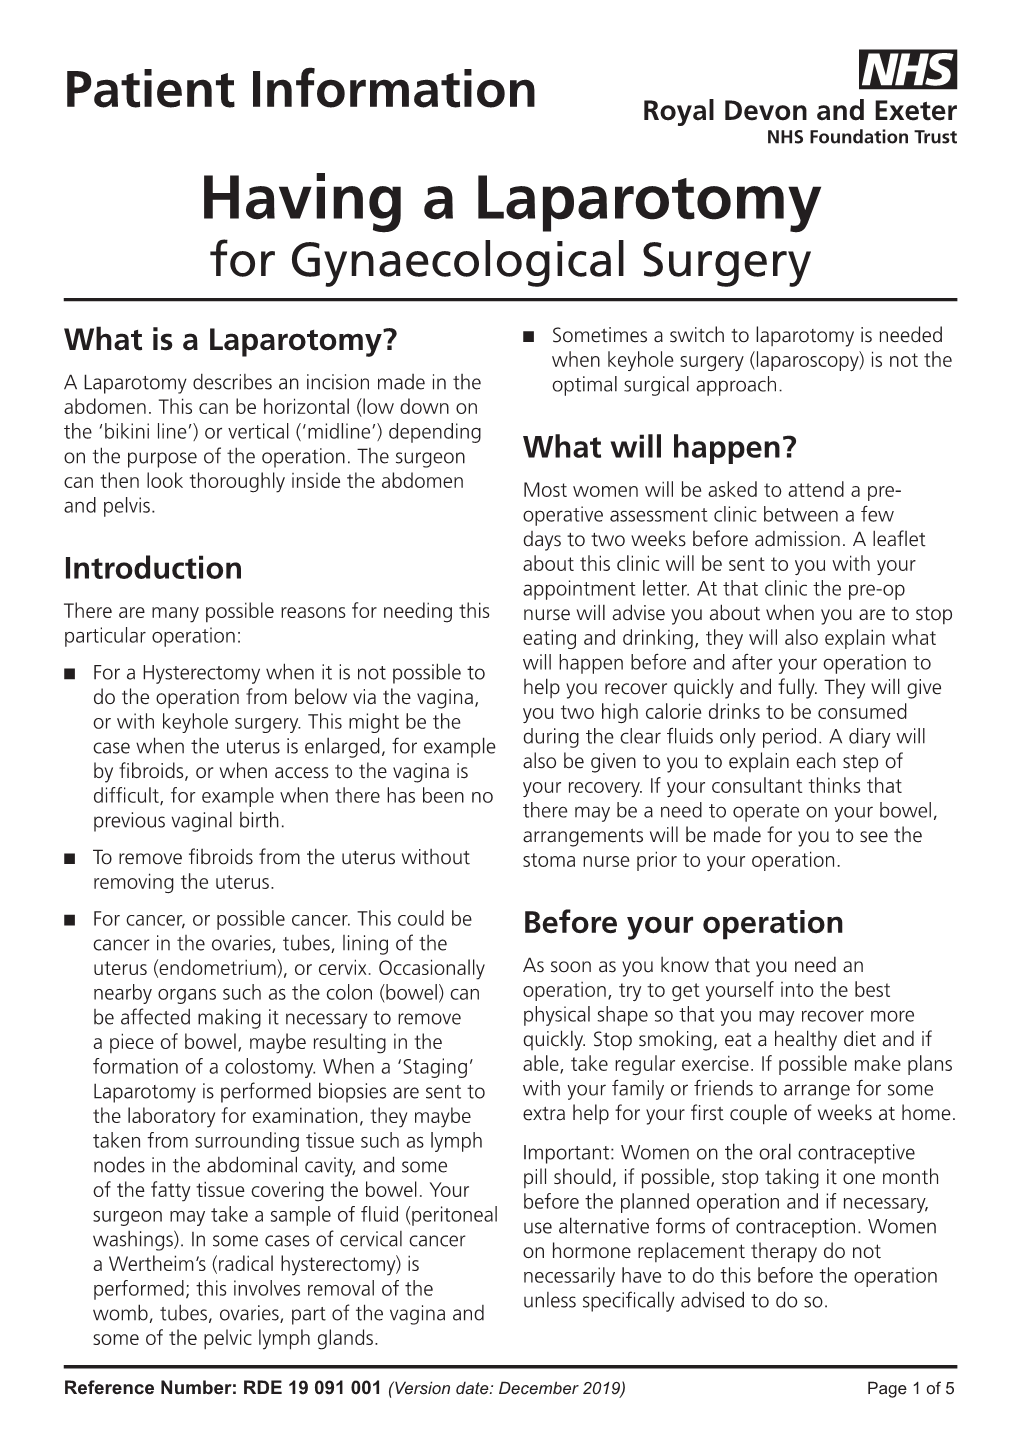 Having a Laparotomy for Gynaecological Surgery